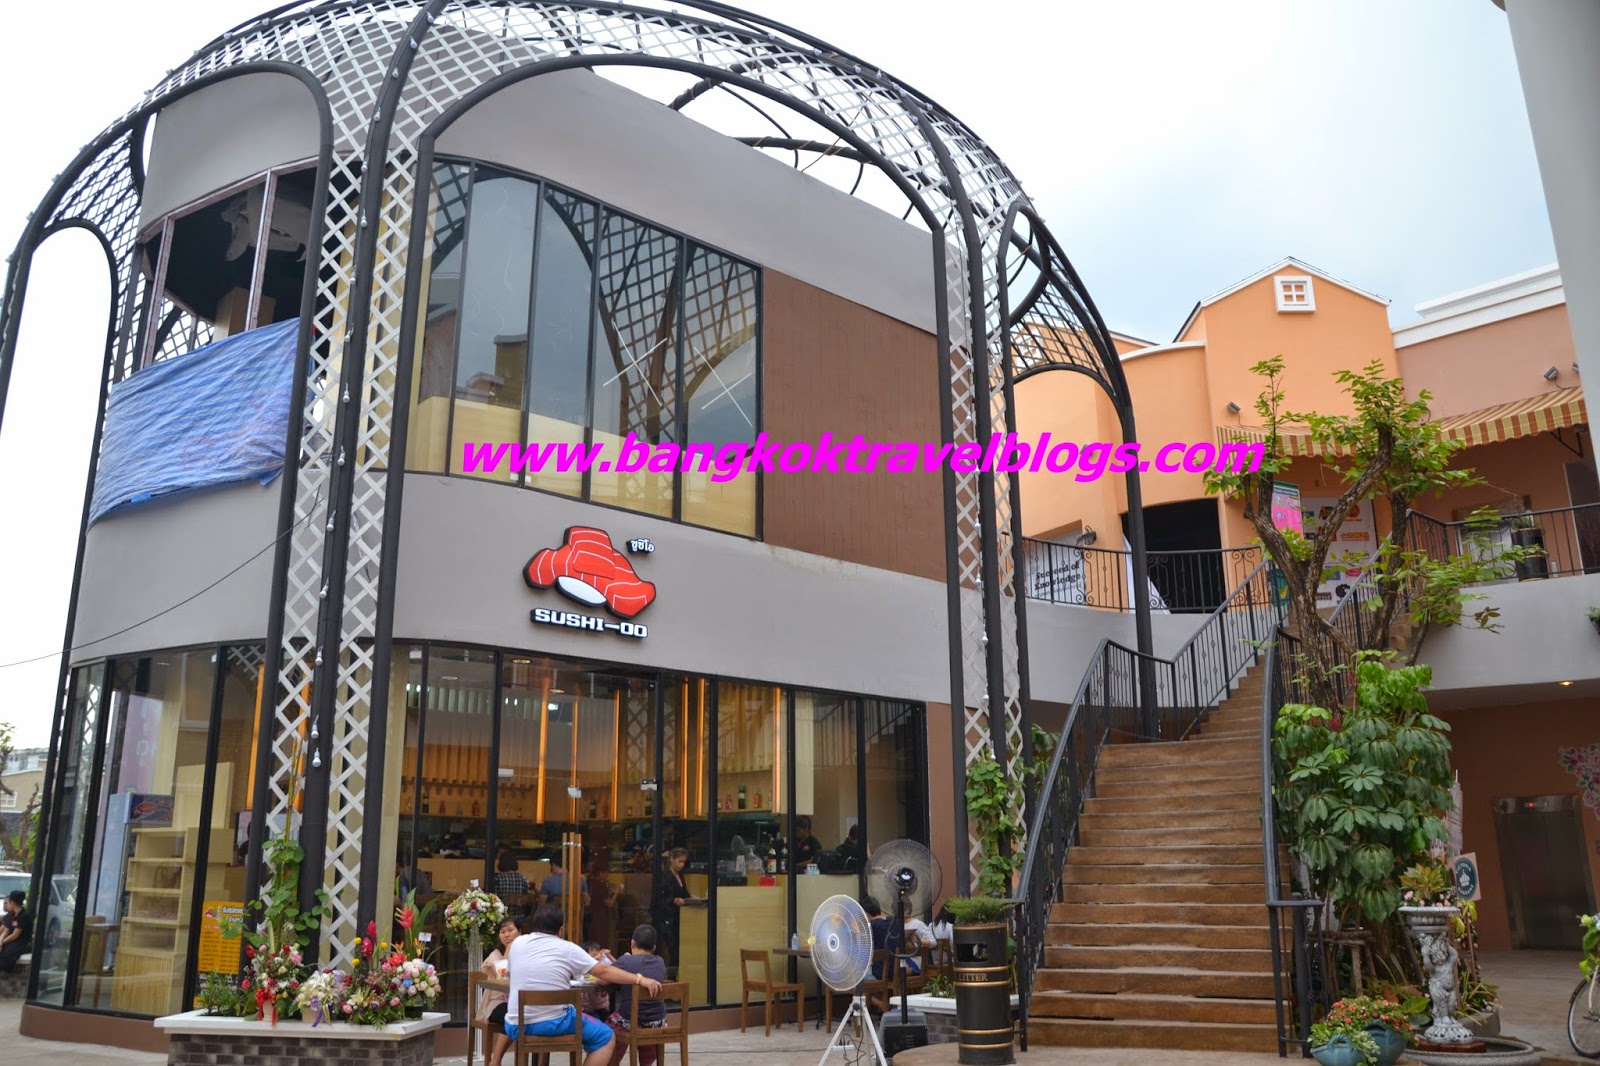 The Victoria Gardens Community Mall At Petchaksem 69 Bangkok Www